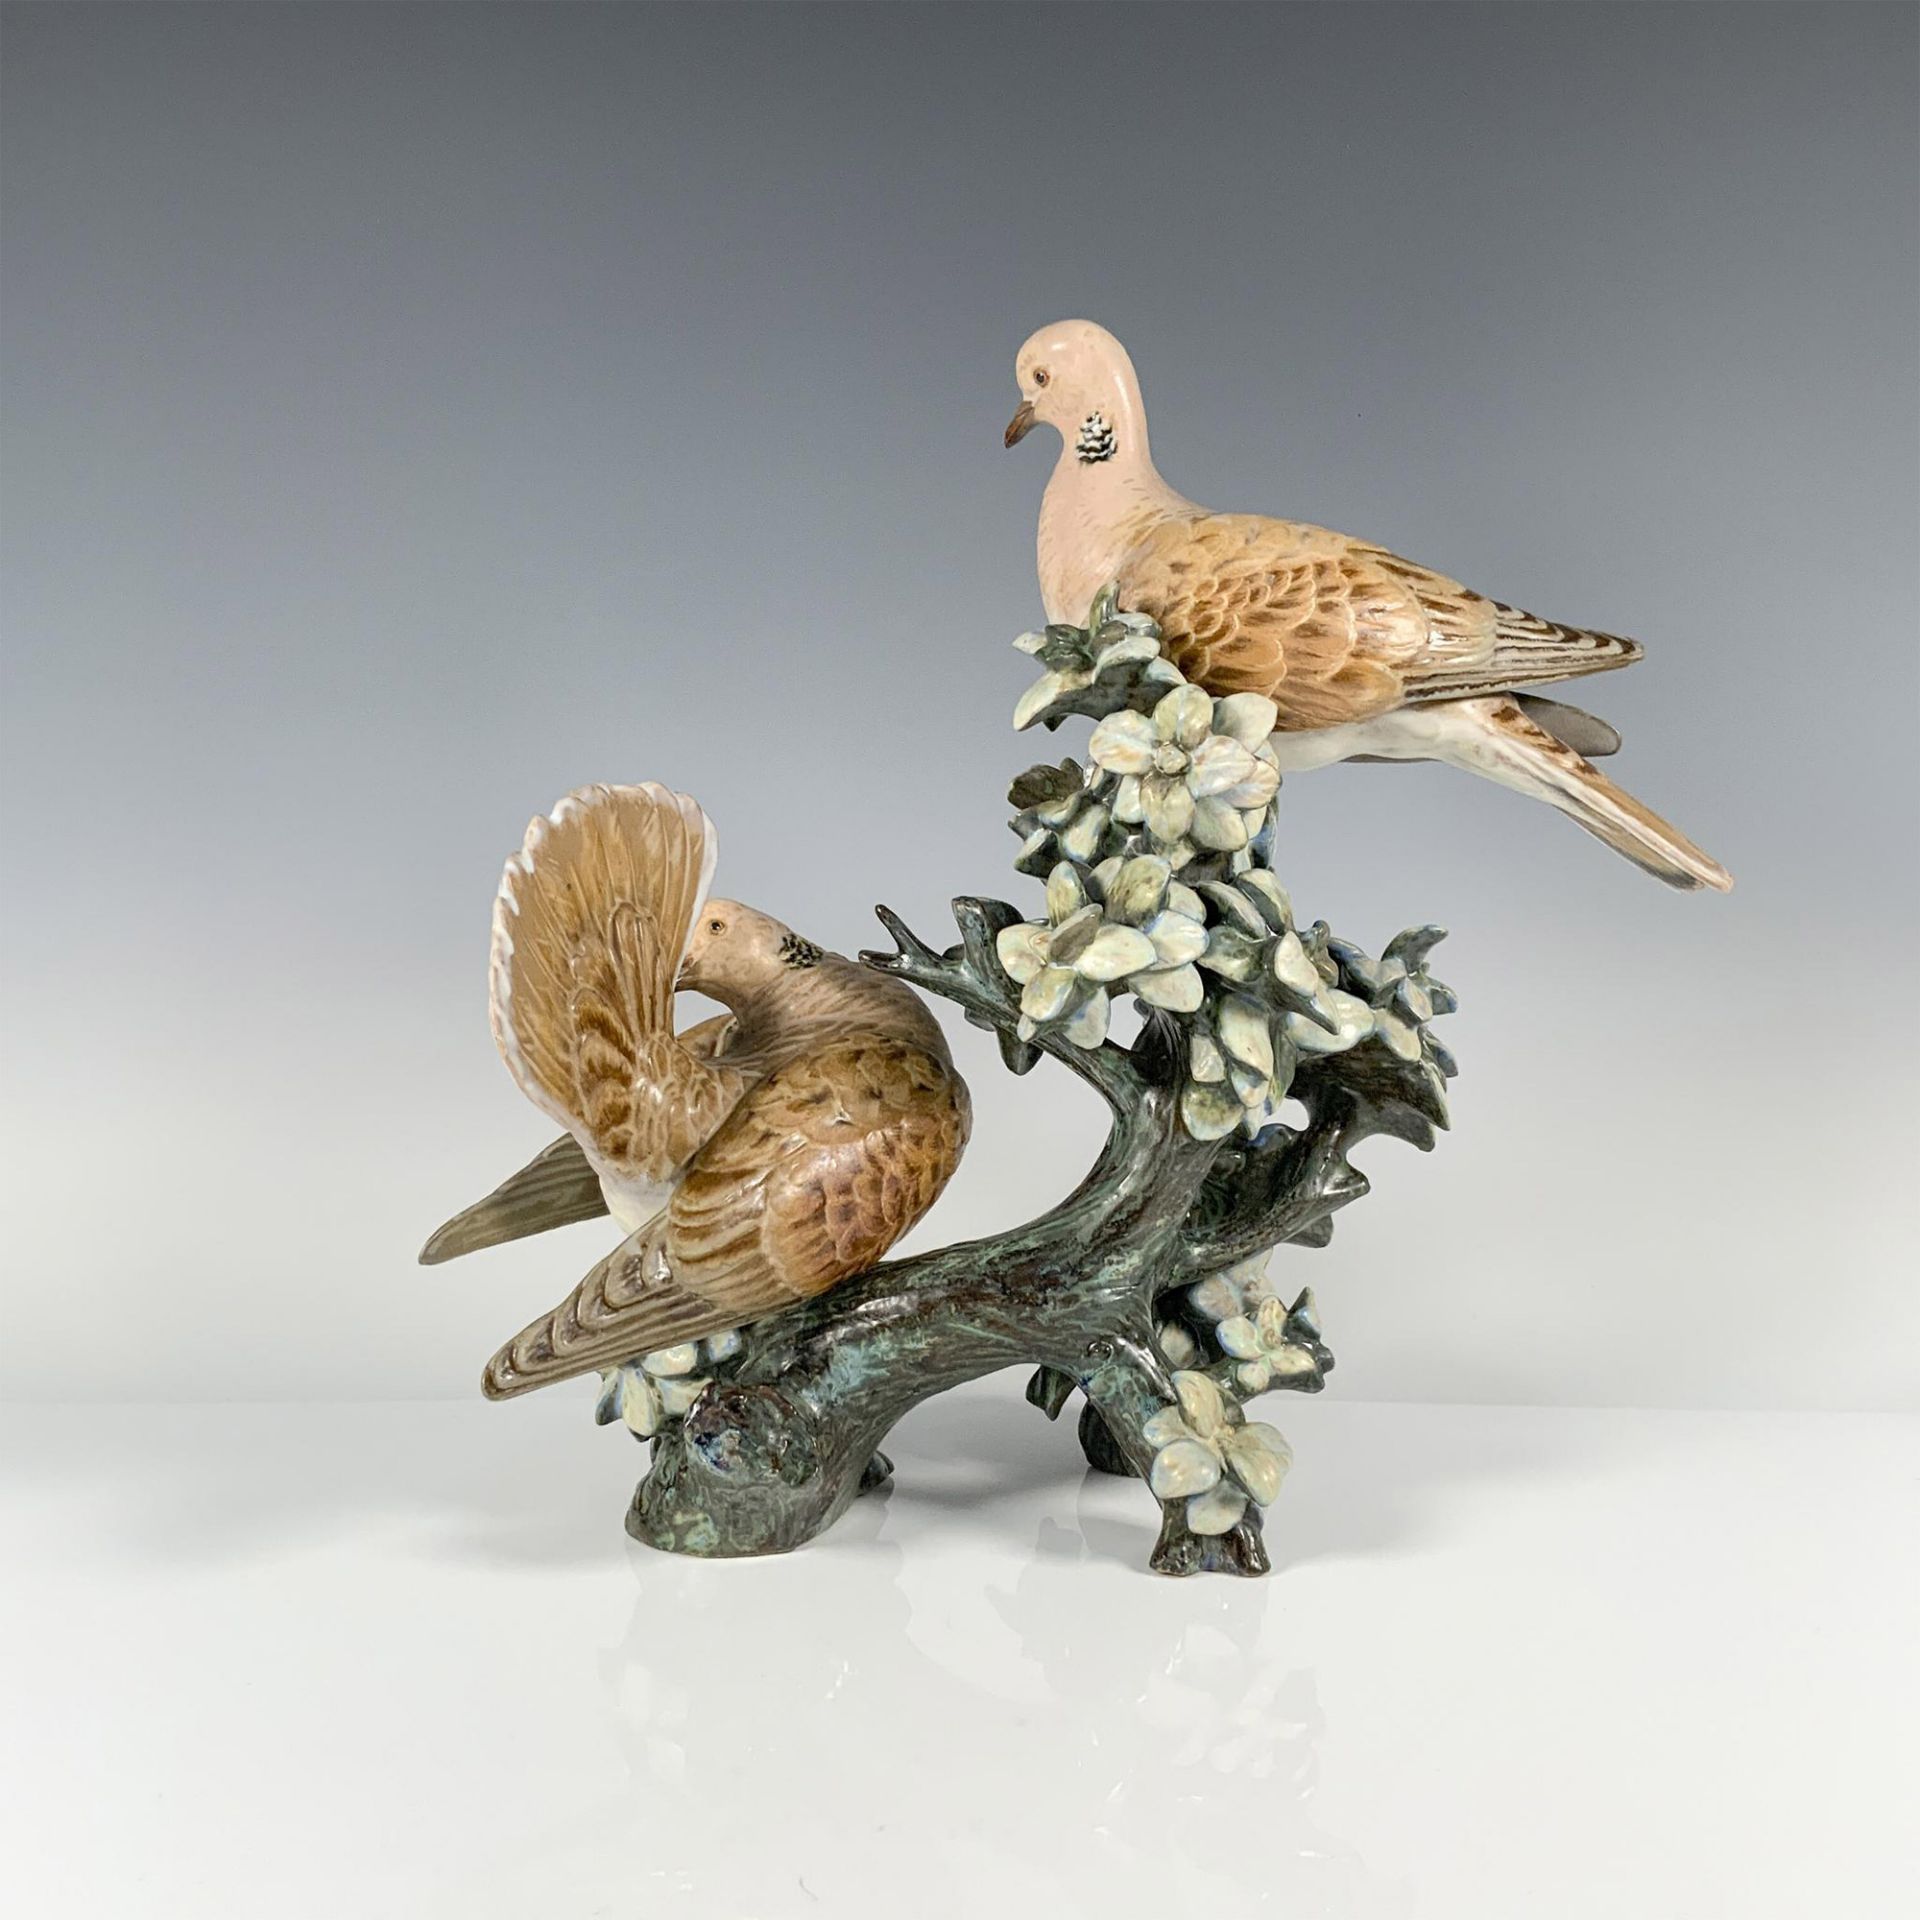 Turtledoves 1011240, Signed - Lladro Porcelain Figurine - Image 2 of 3